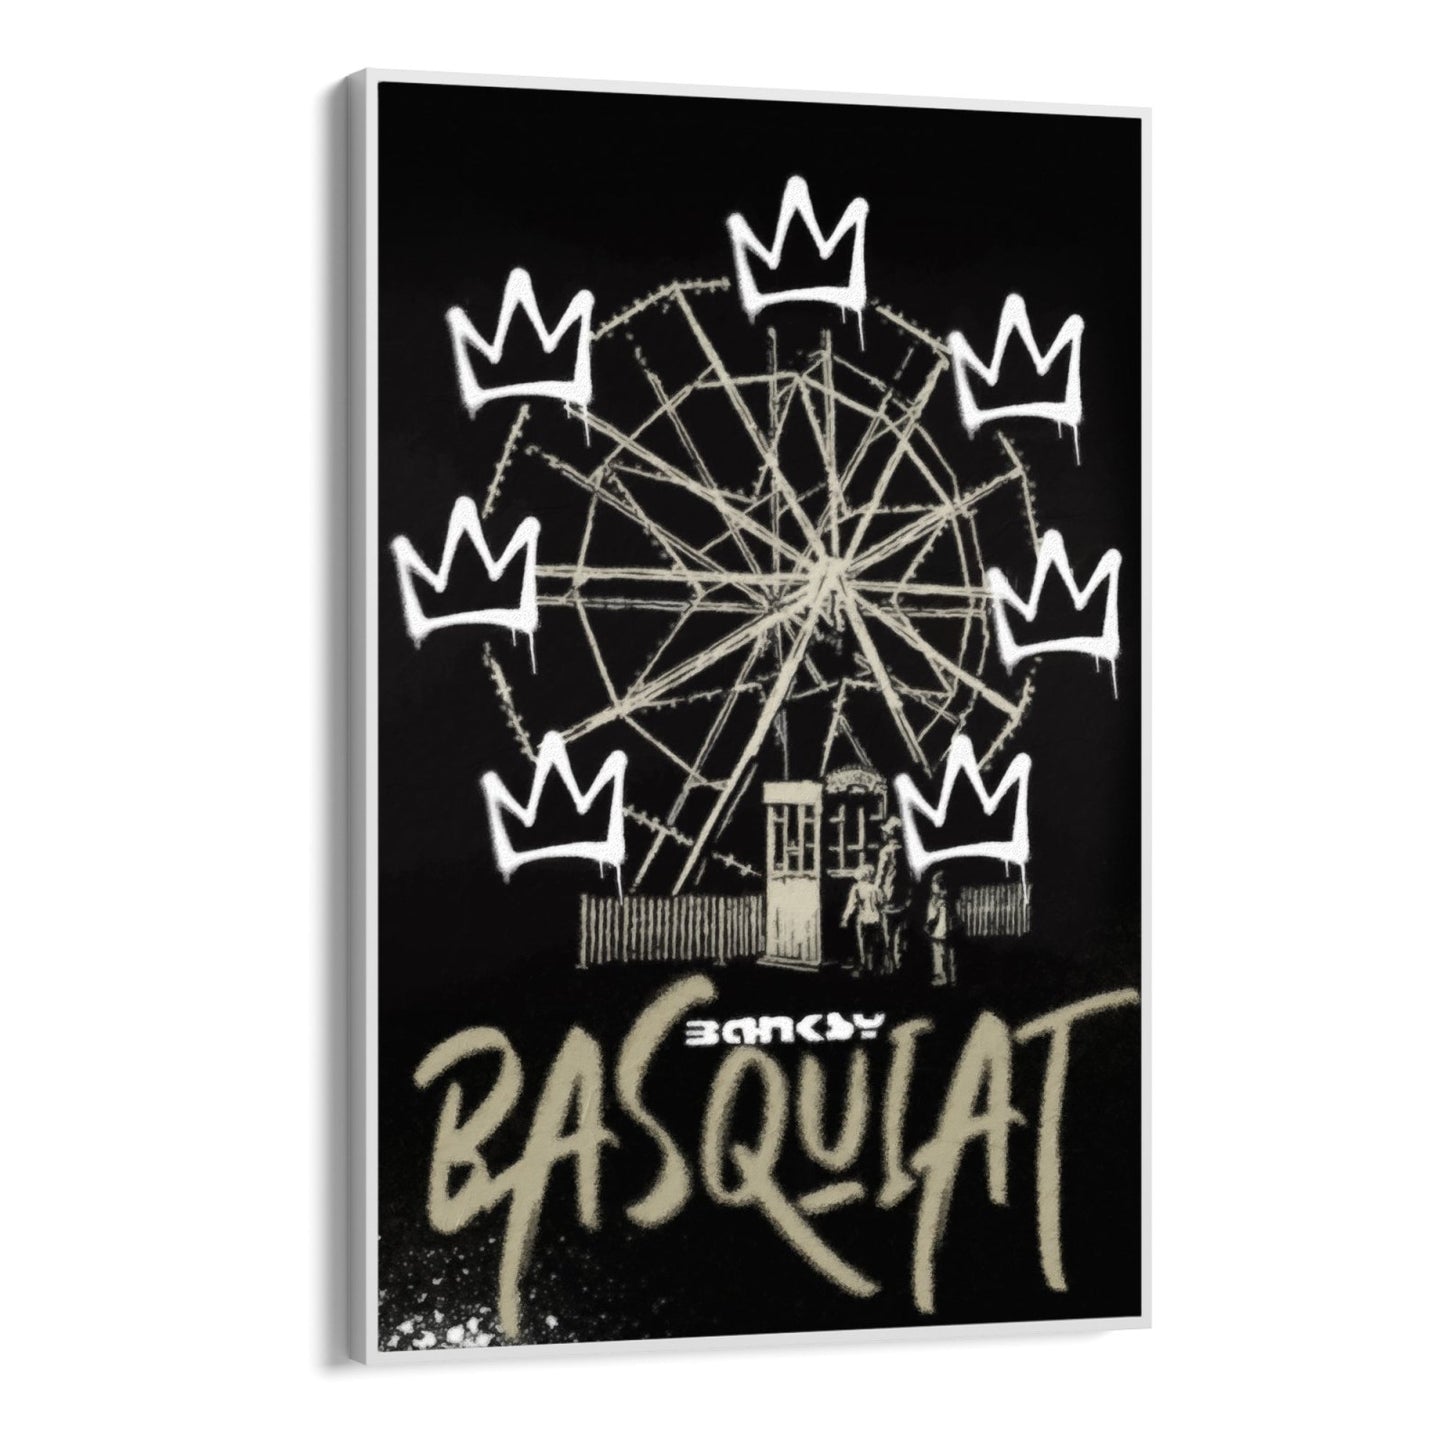 Banksy Basquiat Graffiti